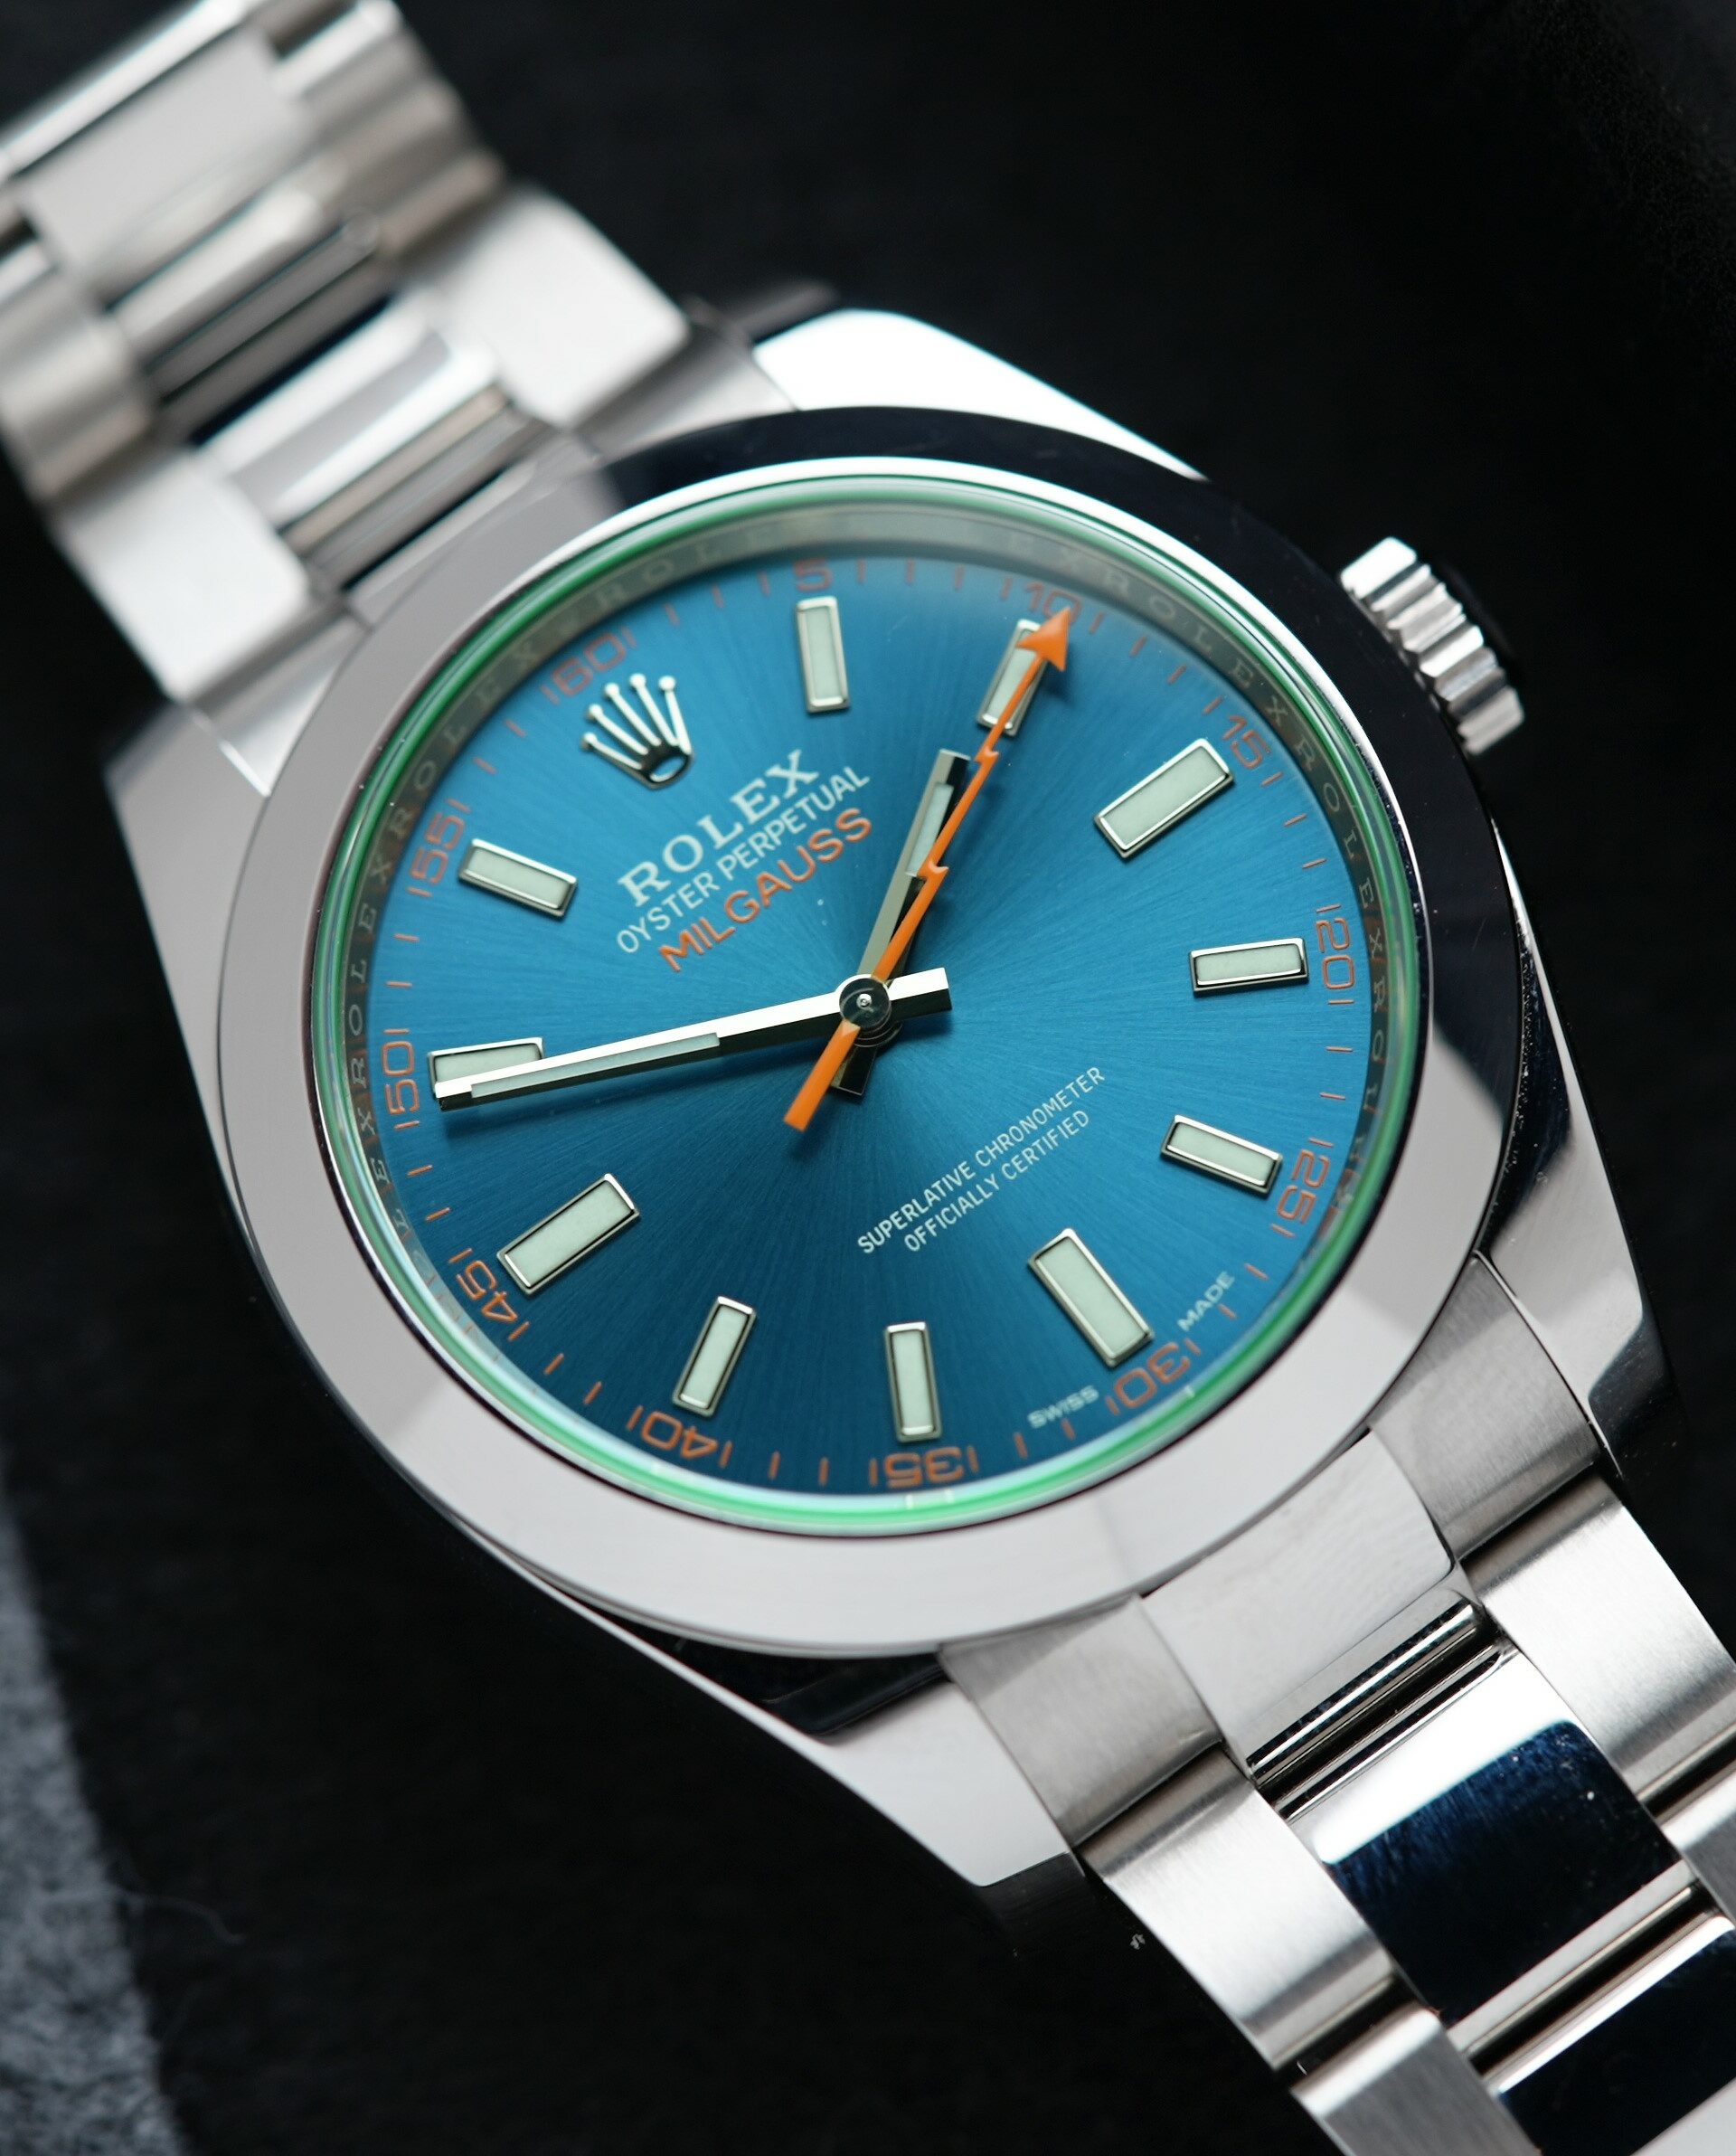 Rolex Milgauss Z Blue UNWORN 116400GV wristwatch on display on an angle under white light.